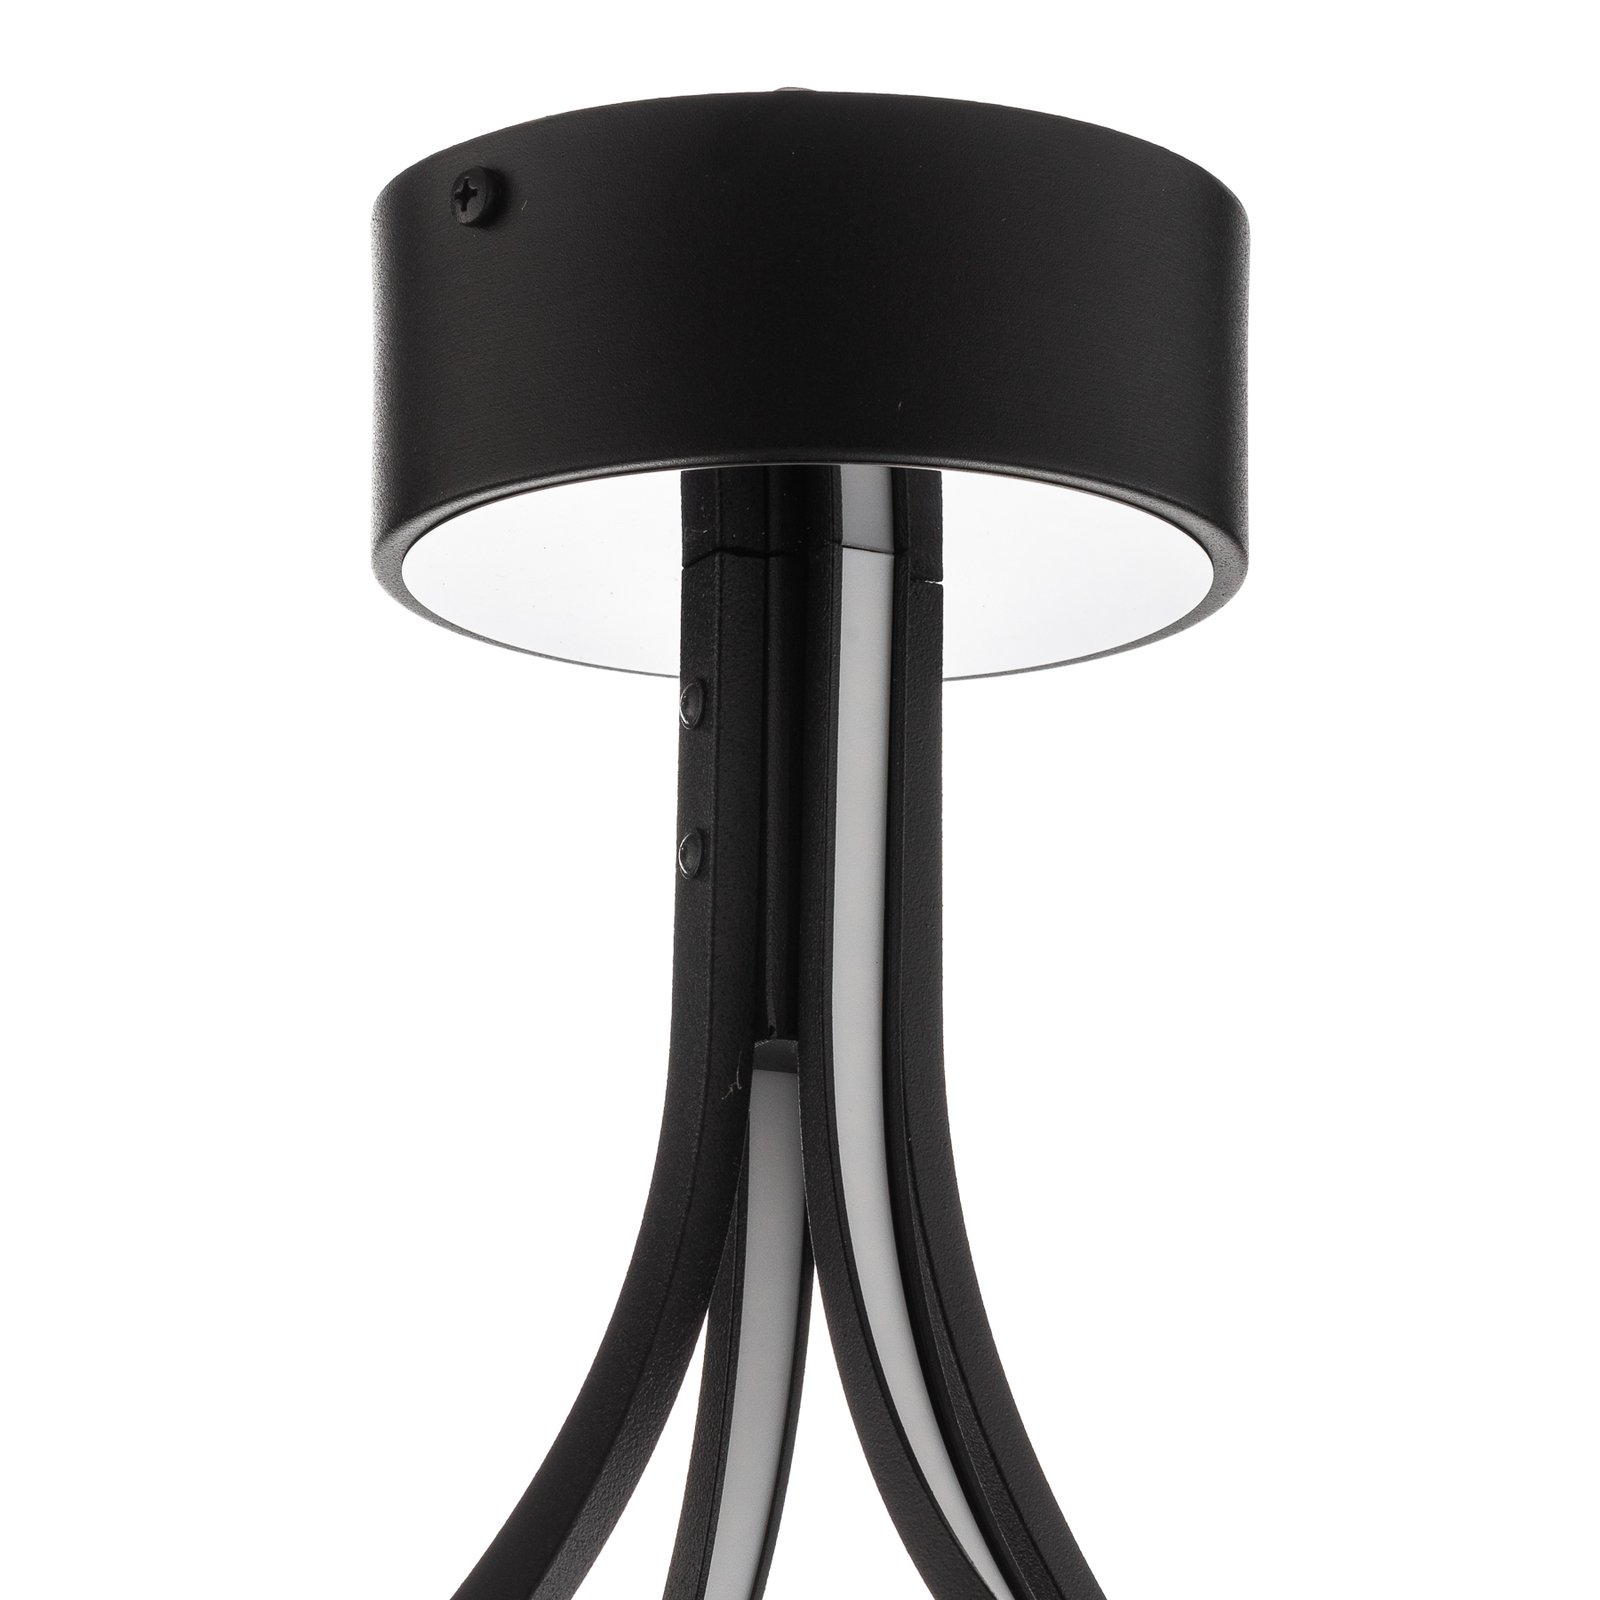 LED-kattolamppu Lungo musta, korkeus 42 cm